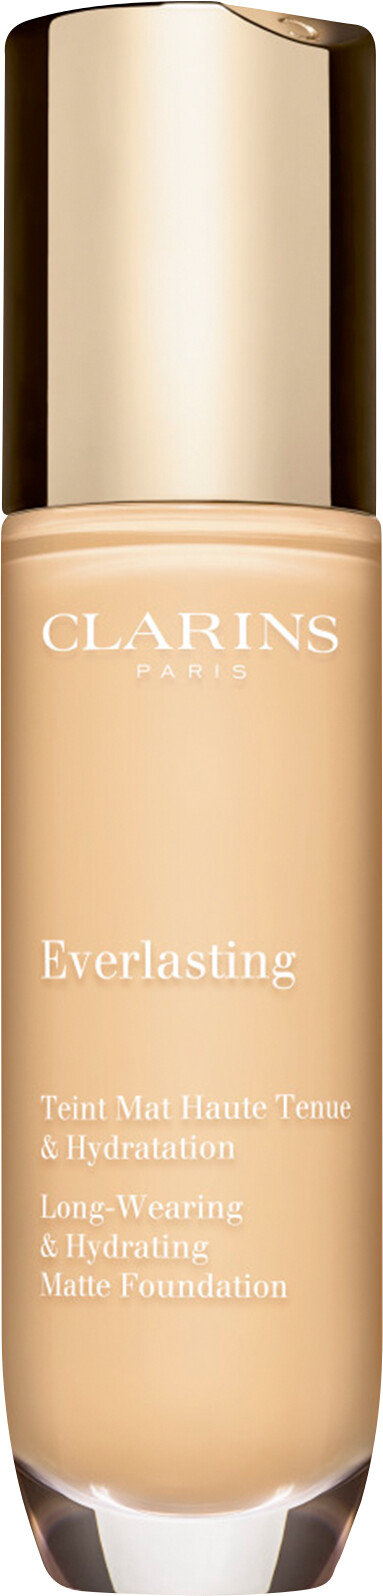 Clarins Everlasting Long-Wearing & Hydrating Matte Foundation 30ml 101W - Linen